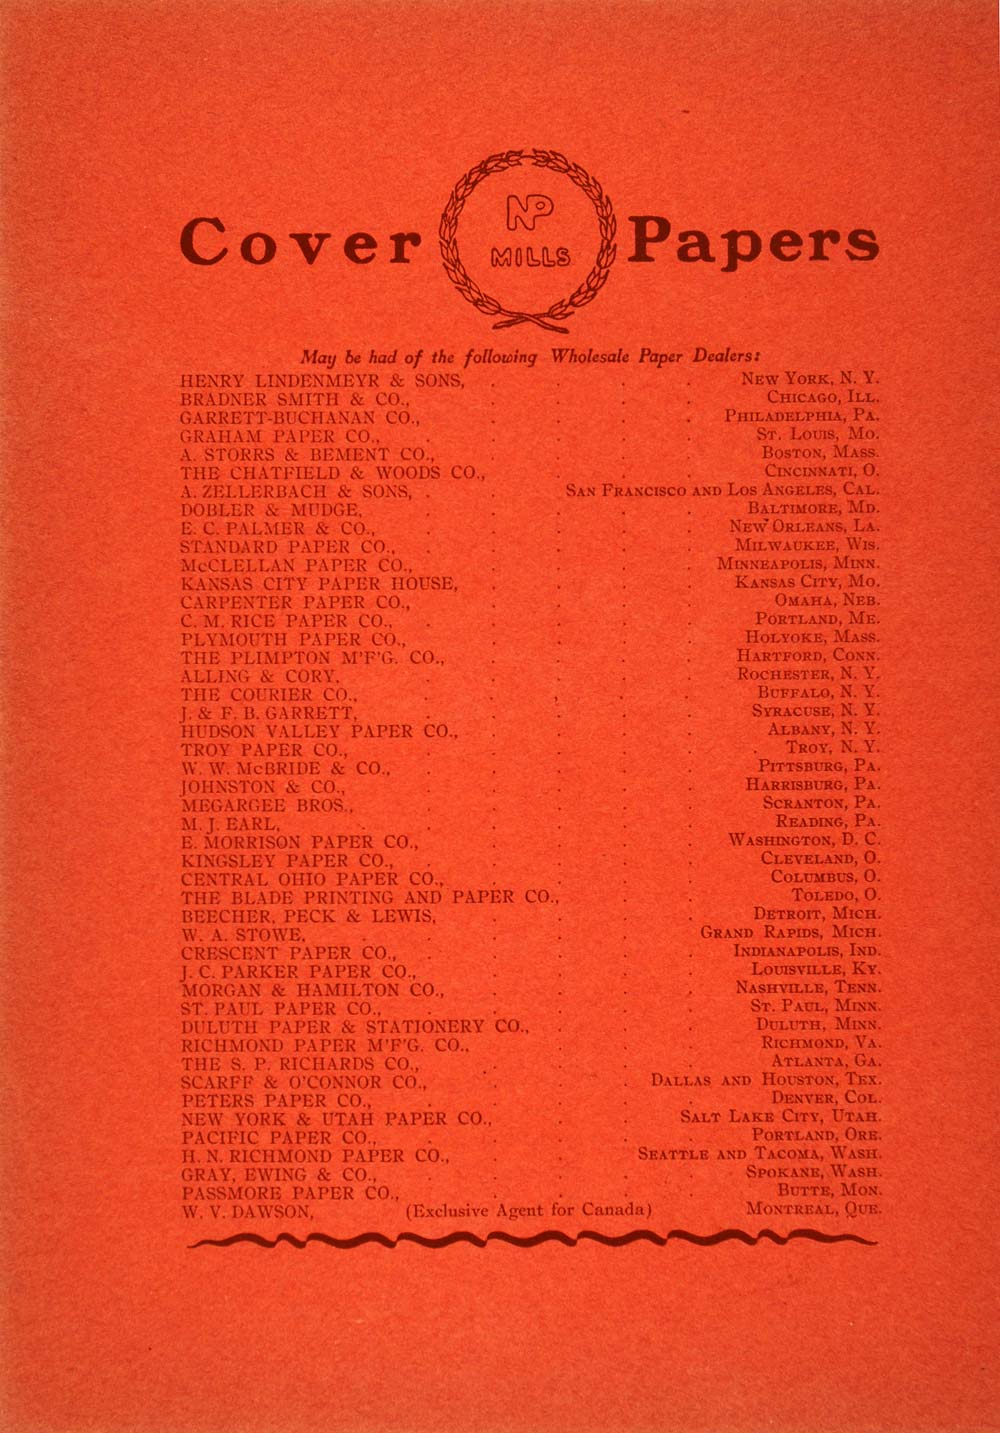 1901 Ad Niagara Paper Mills Lockport NY Seagull Gull - ORIGINAL ADVERTISING PA1